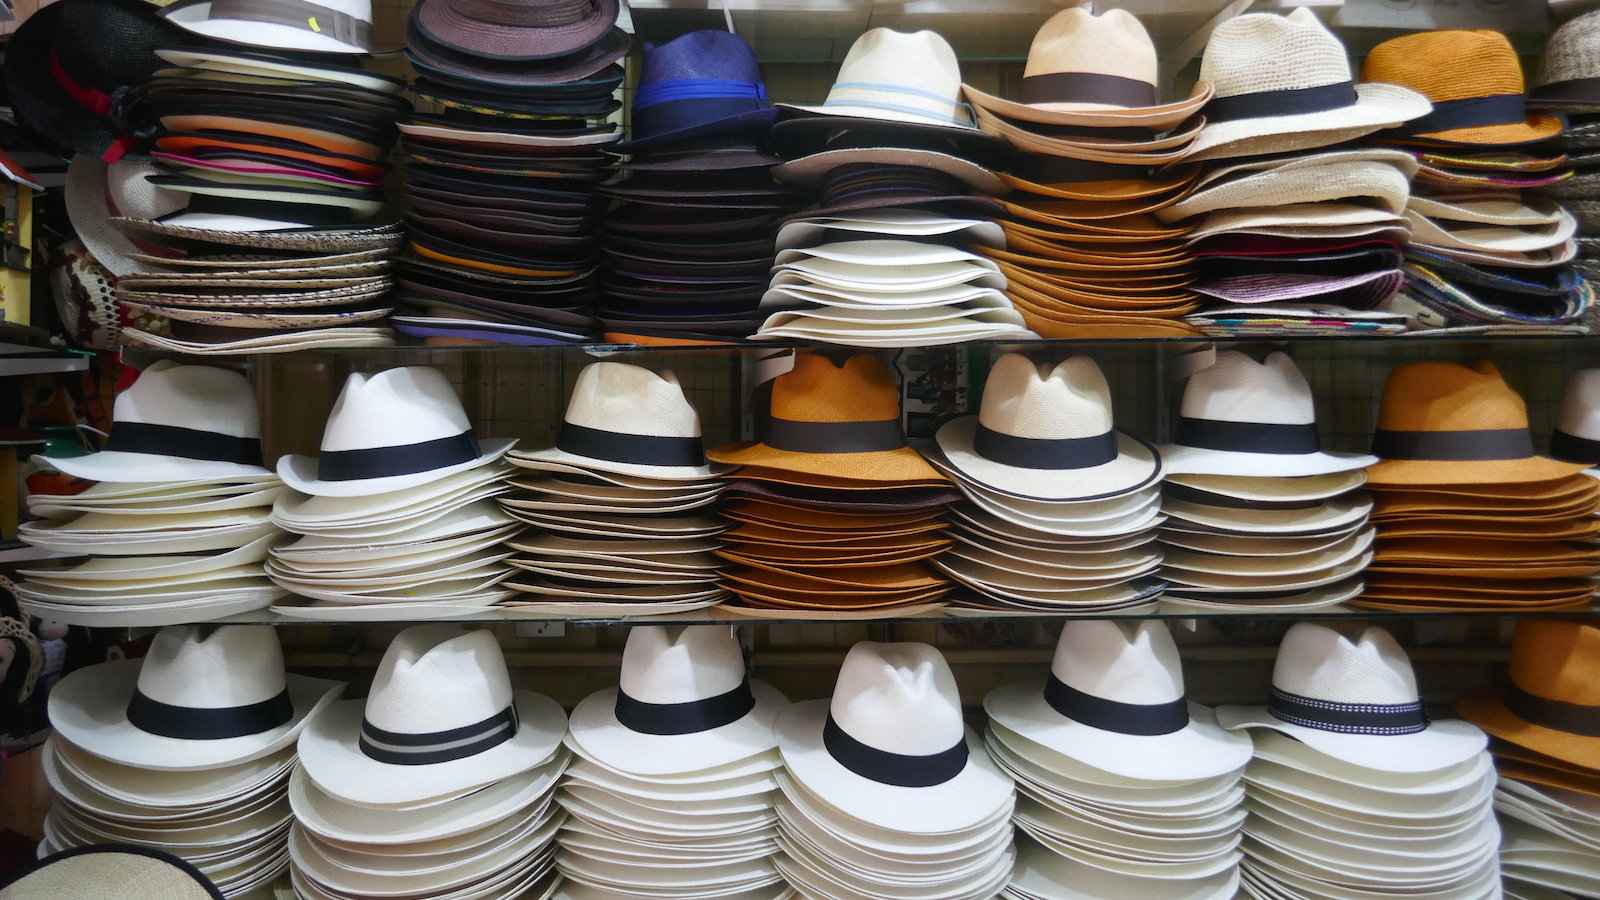 Did you know that Panama hats originate in Ecuador, not Panama